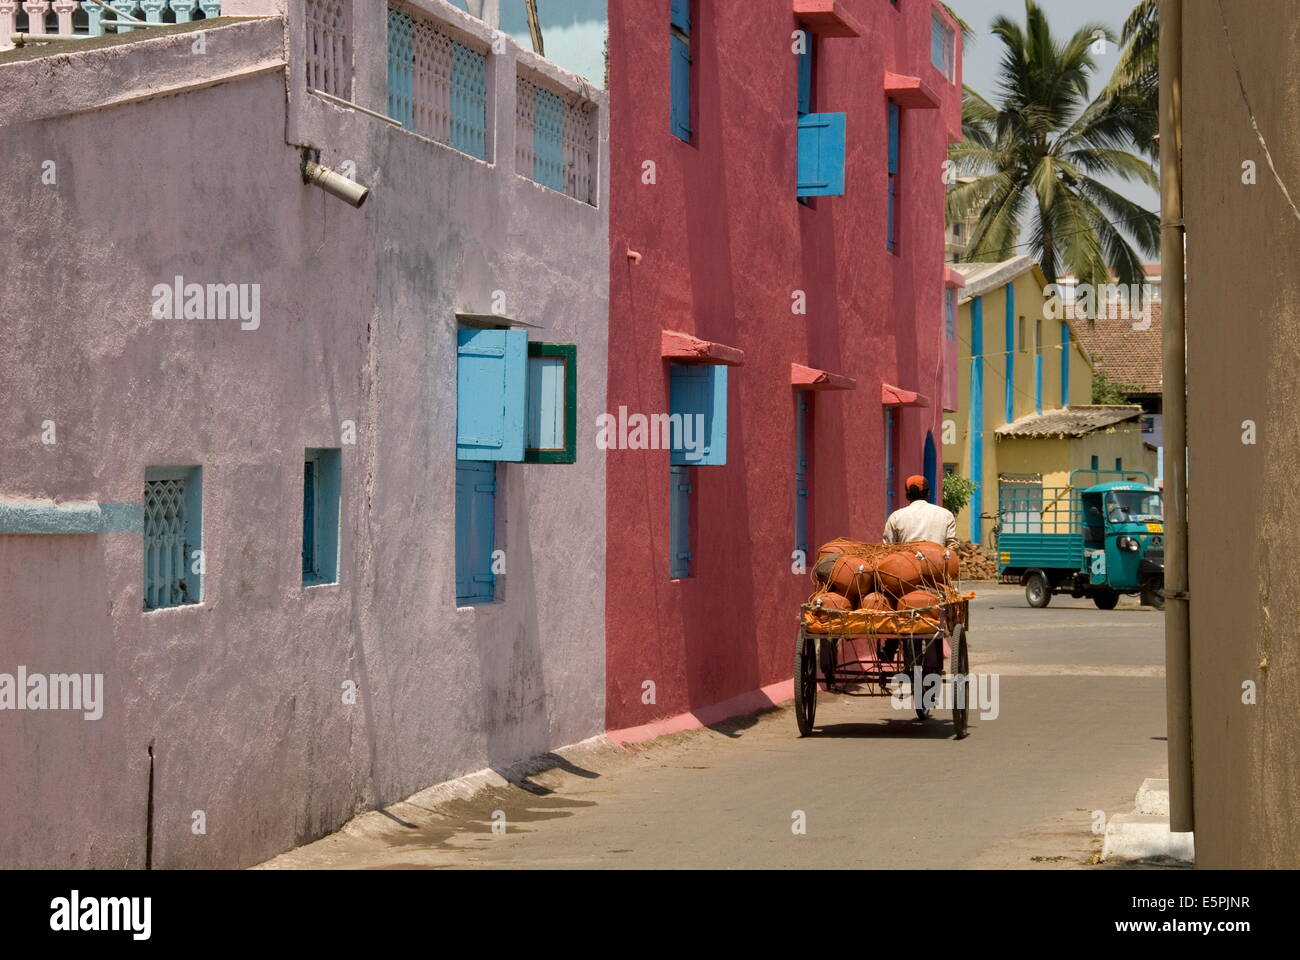 Residential street in the new town of Nani Daman, Daman, Gujarat, India, Asia Stock Photo